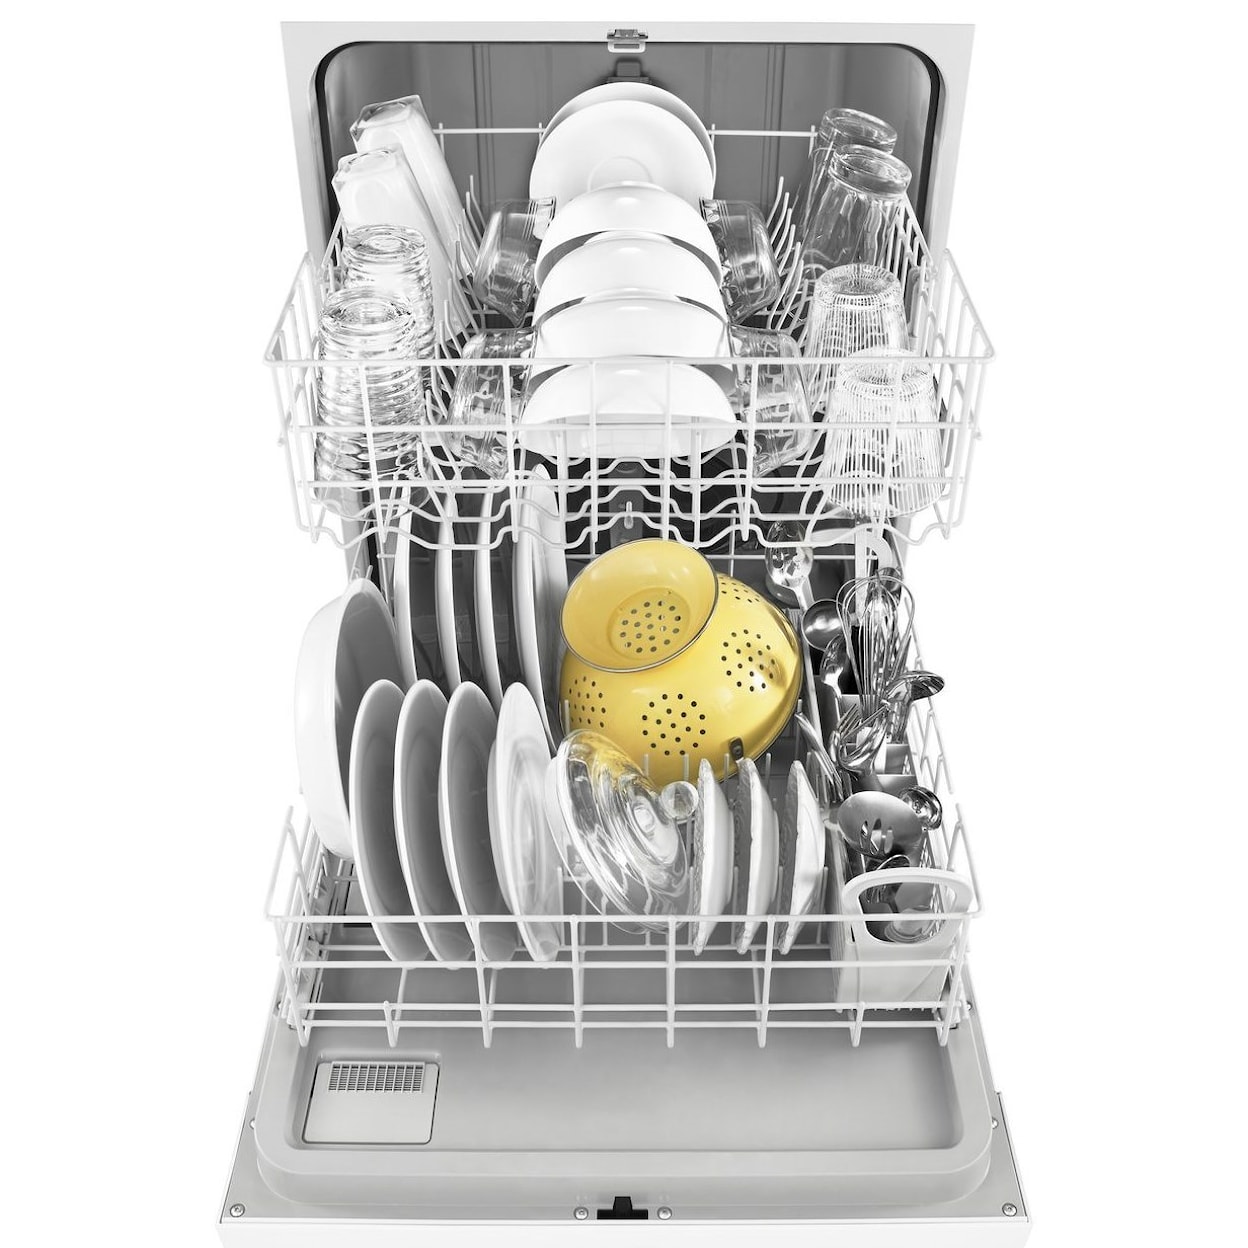 Whirlpool Dishwashers - Whirlpool Heavy-Duty Dishwasher with 1-hour Wash Cycle